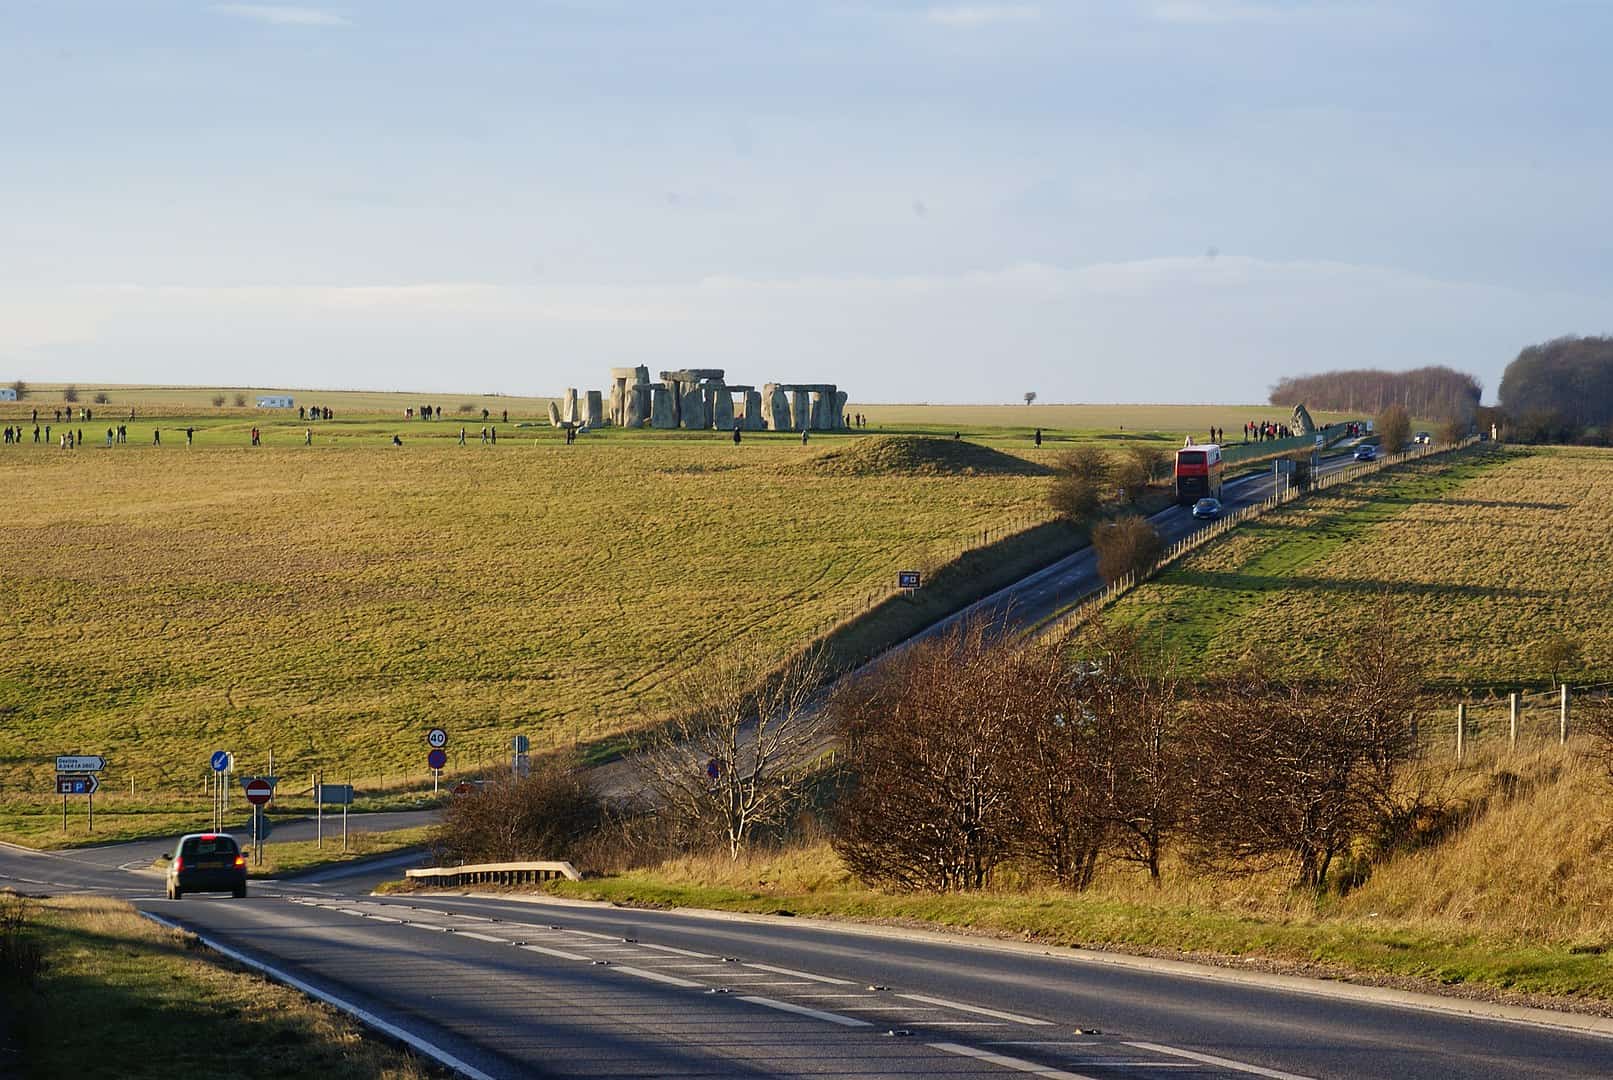 Stonehenge Facts, A344 Road and Stonehenge